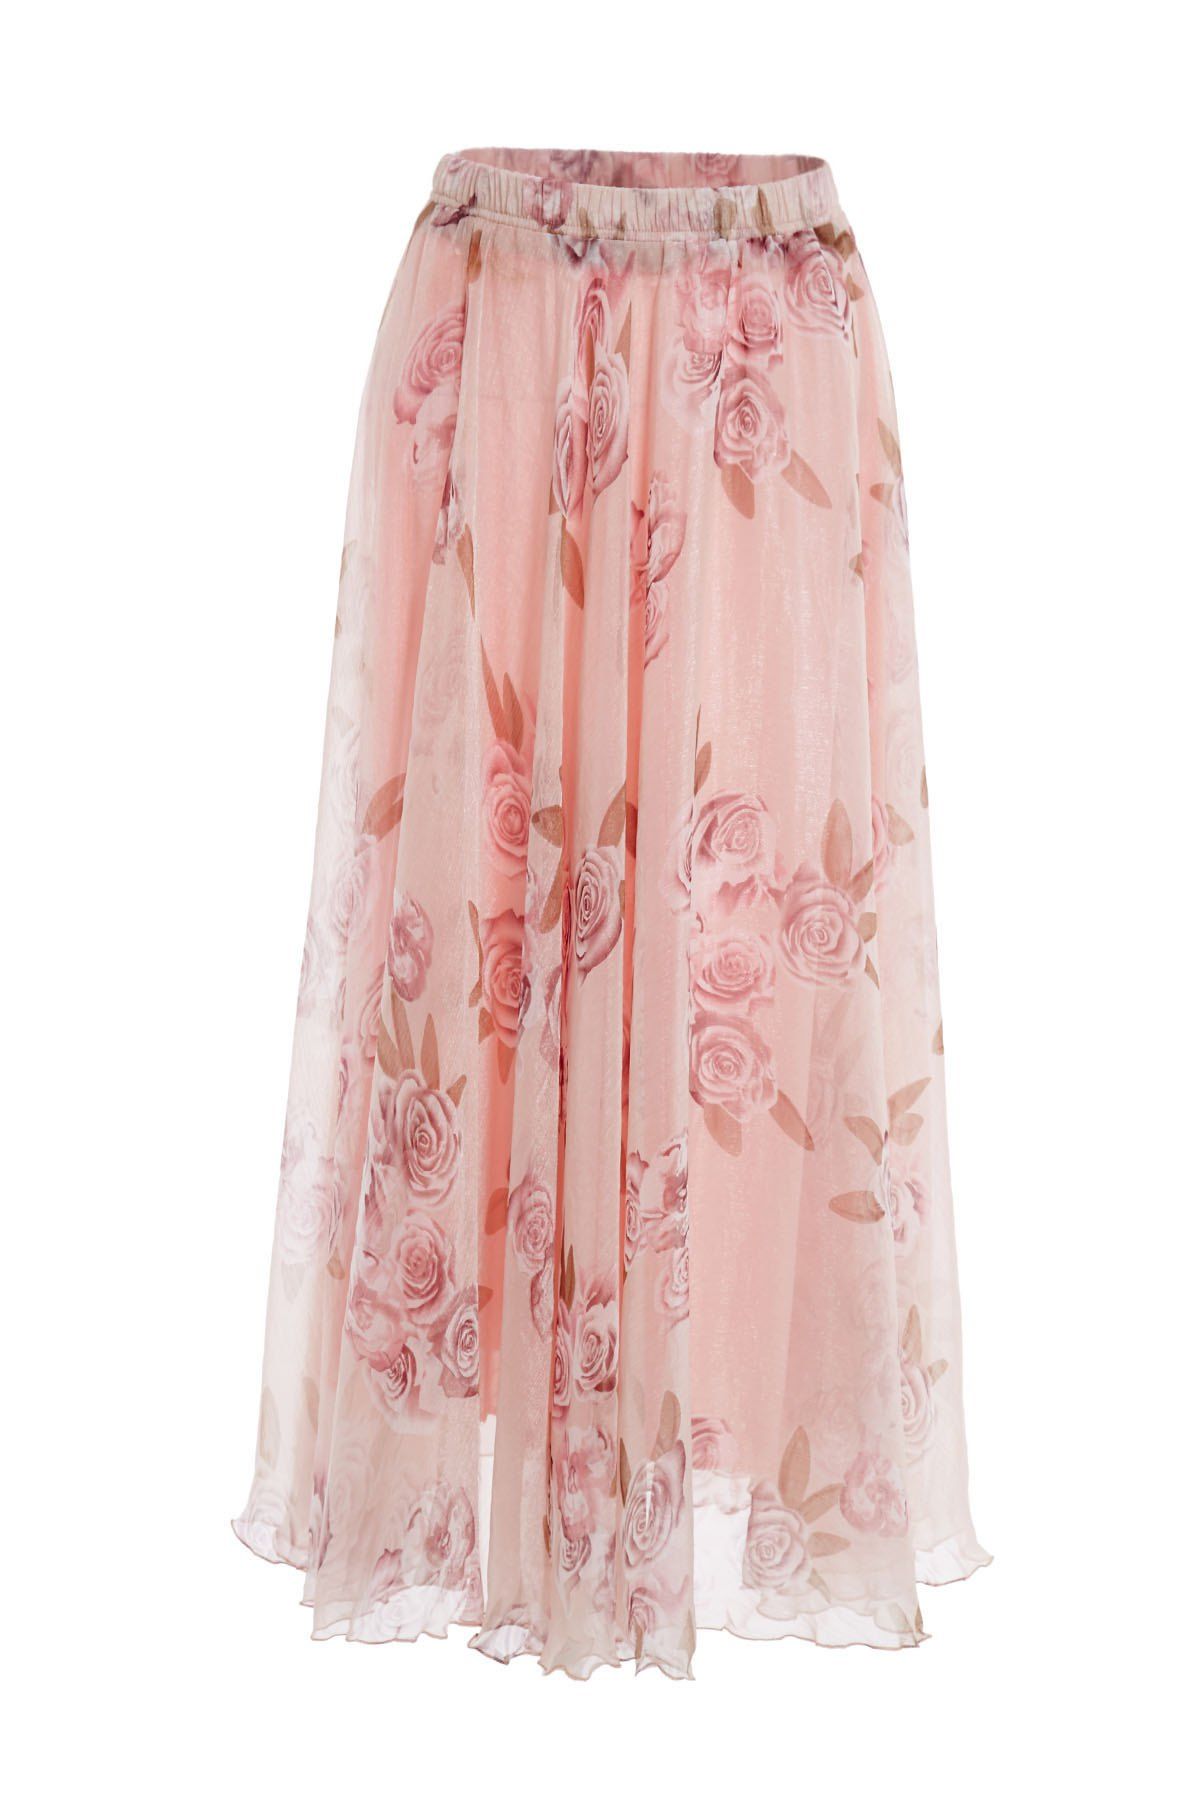 [41% OFF] 2021 Trendy Elastic Waist Floral Print Women's Chiffon Skirt ...